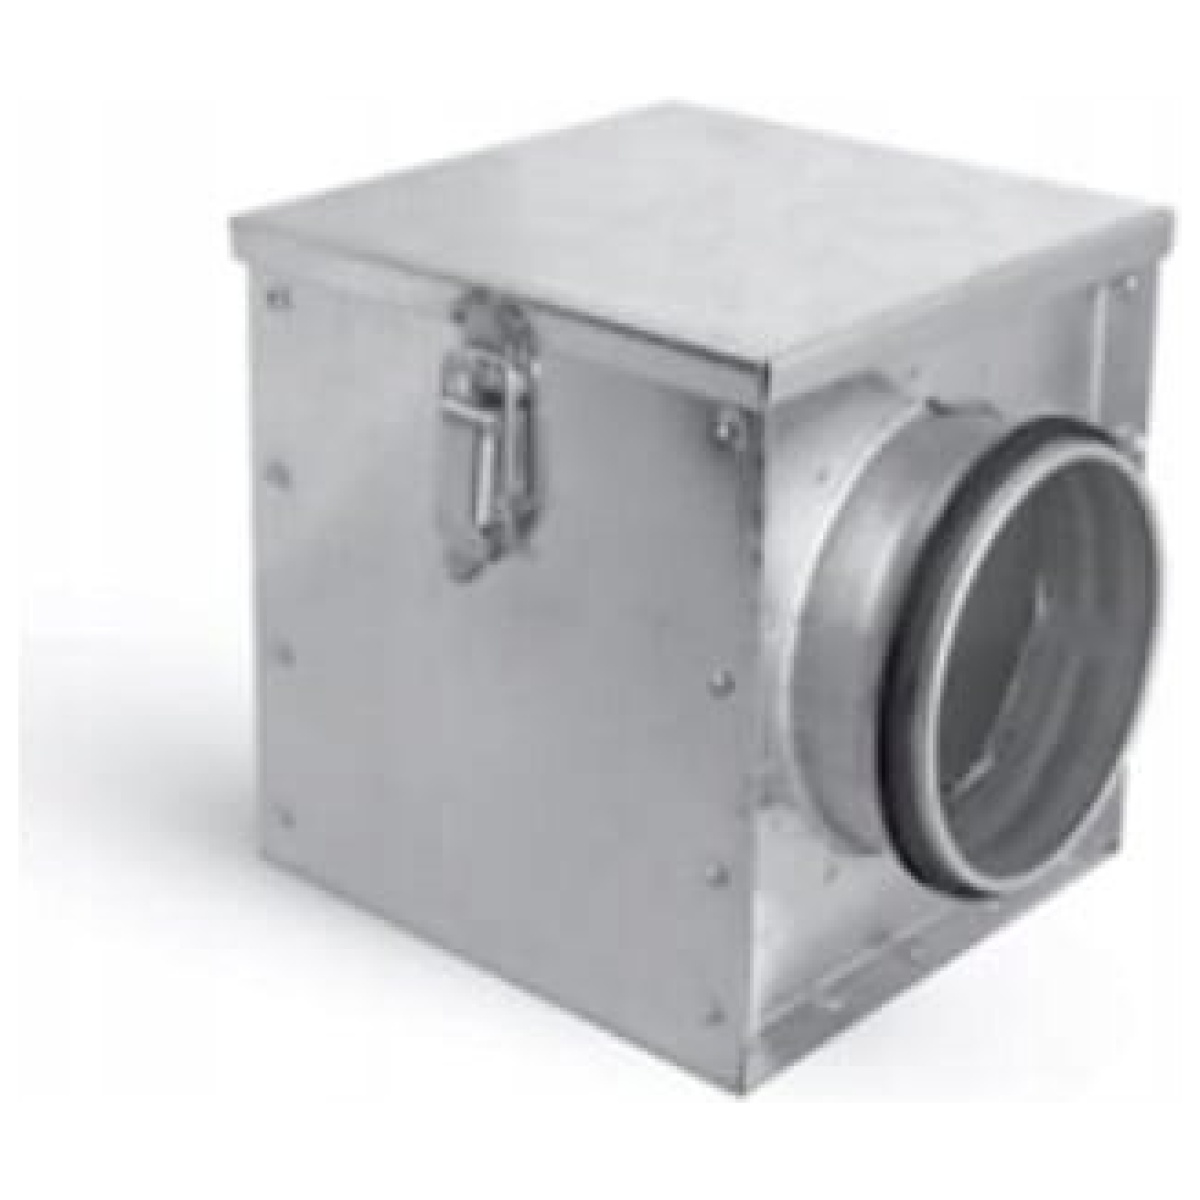 Filtr powietrza kanałowy z kasetą FKK 100 mm EU3 - Forvent FKK-B-100-4